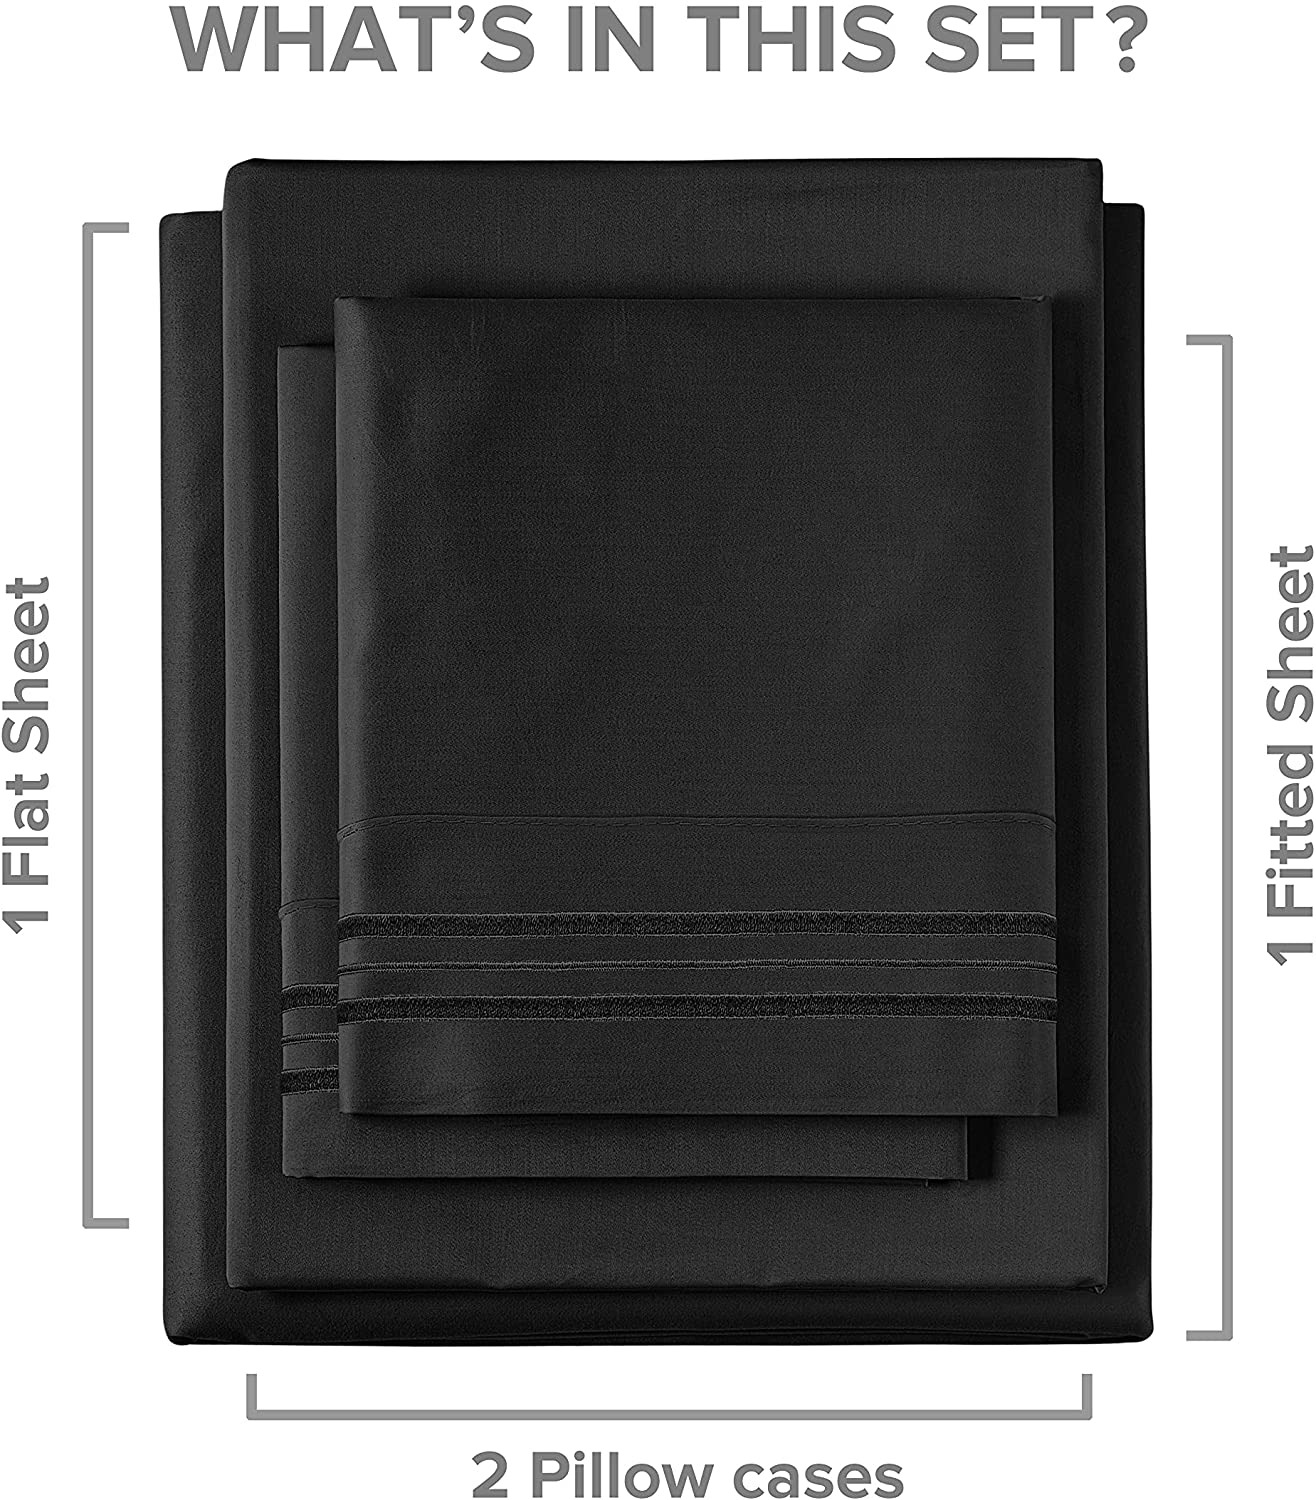 6 Piece Deep Pocket Sheet Set - Black